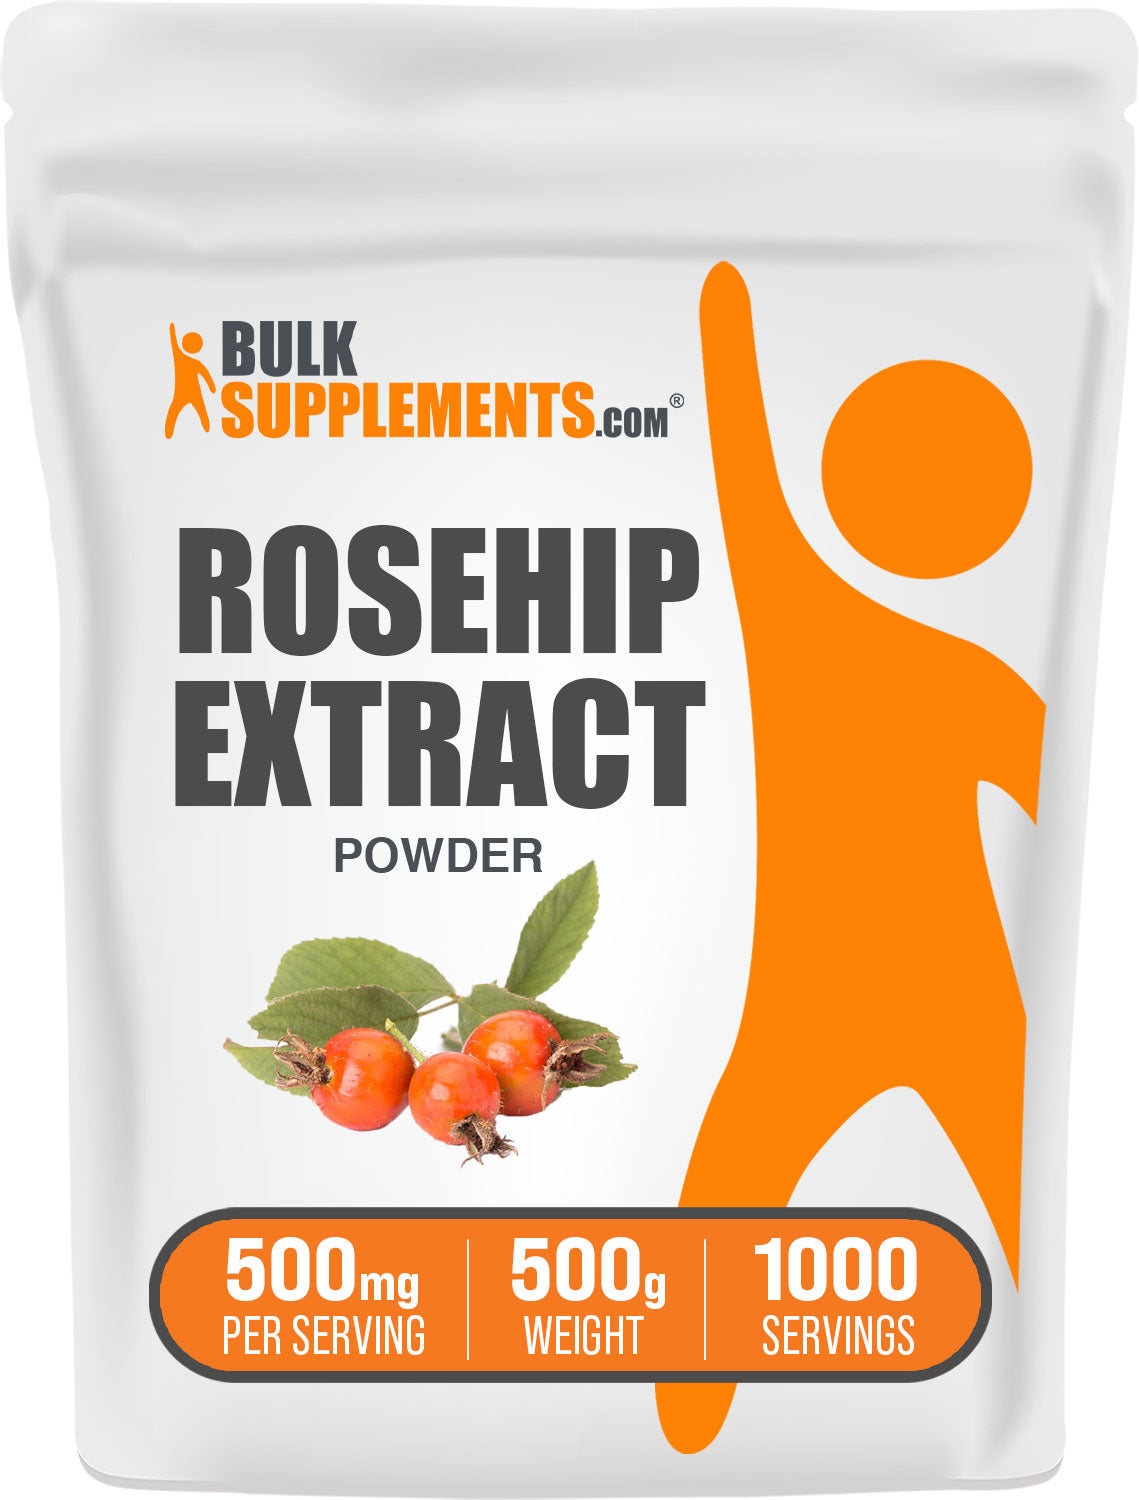 BulkSupplements.com Rosehip Extract Powder 500g Bag